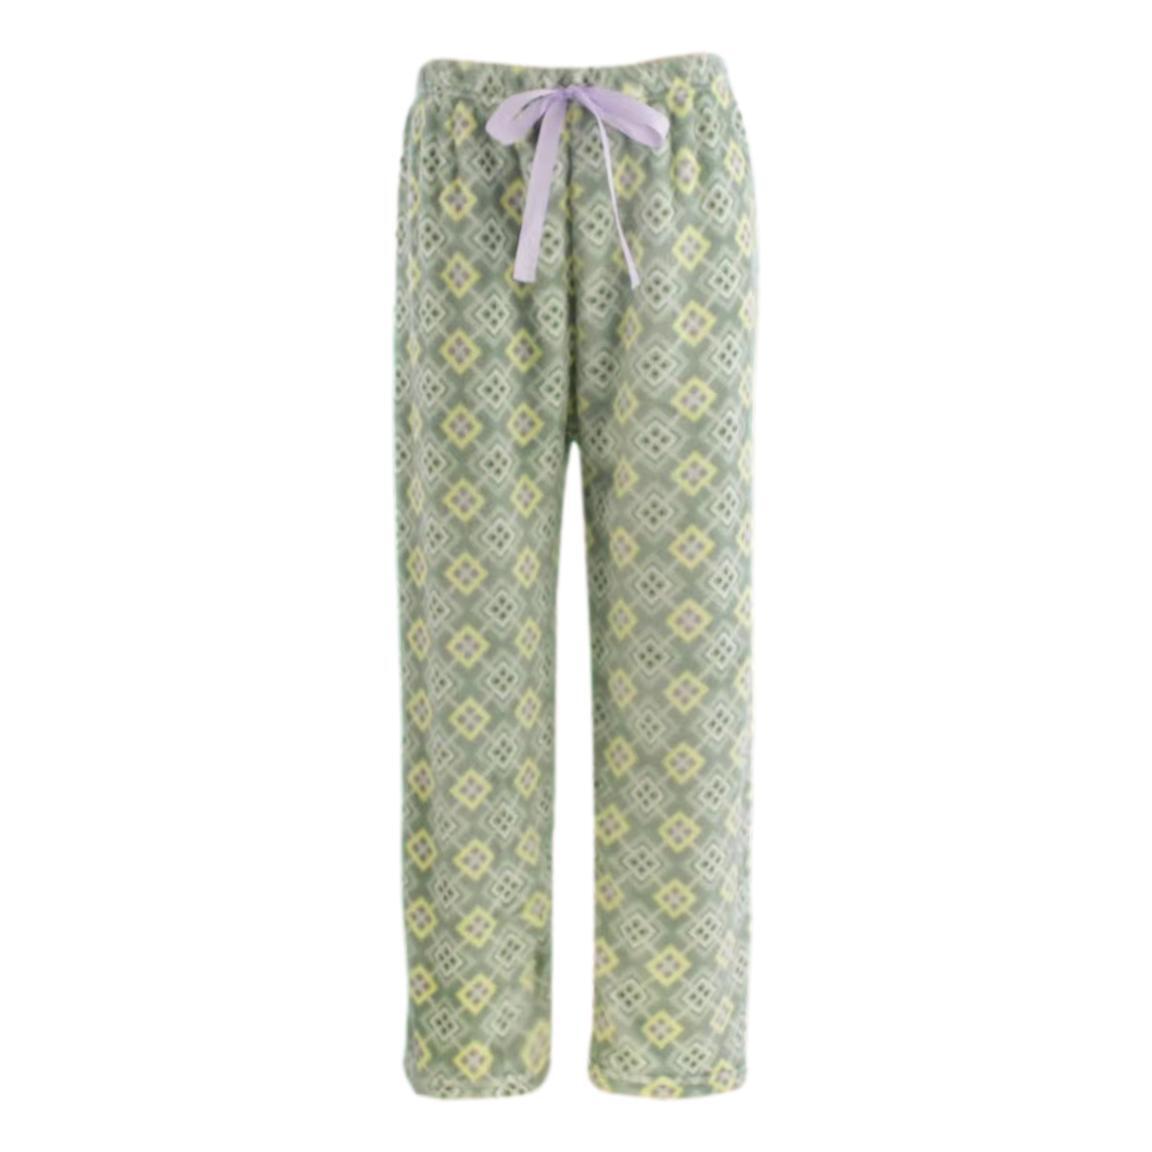 Women's Restorative Sleepwear Sleep Pants | Pajamas & Nightgowns at L.L.Bean